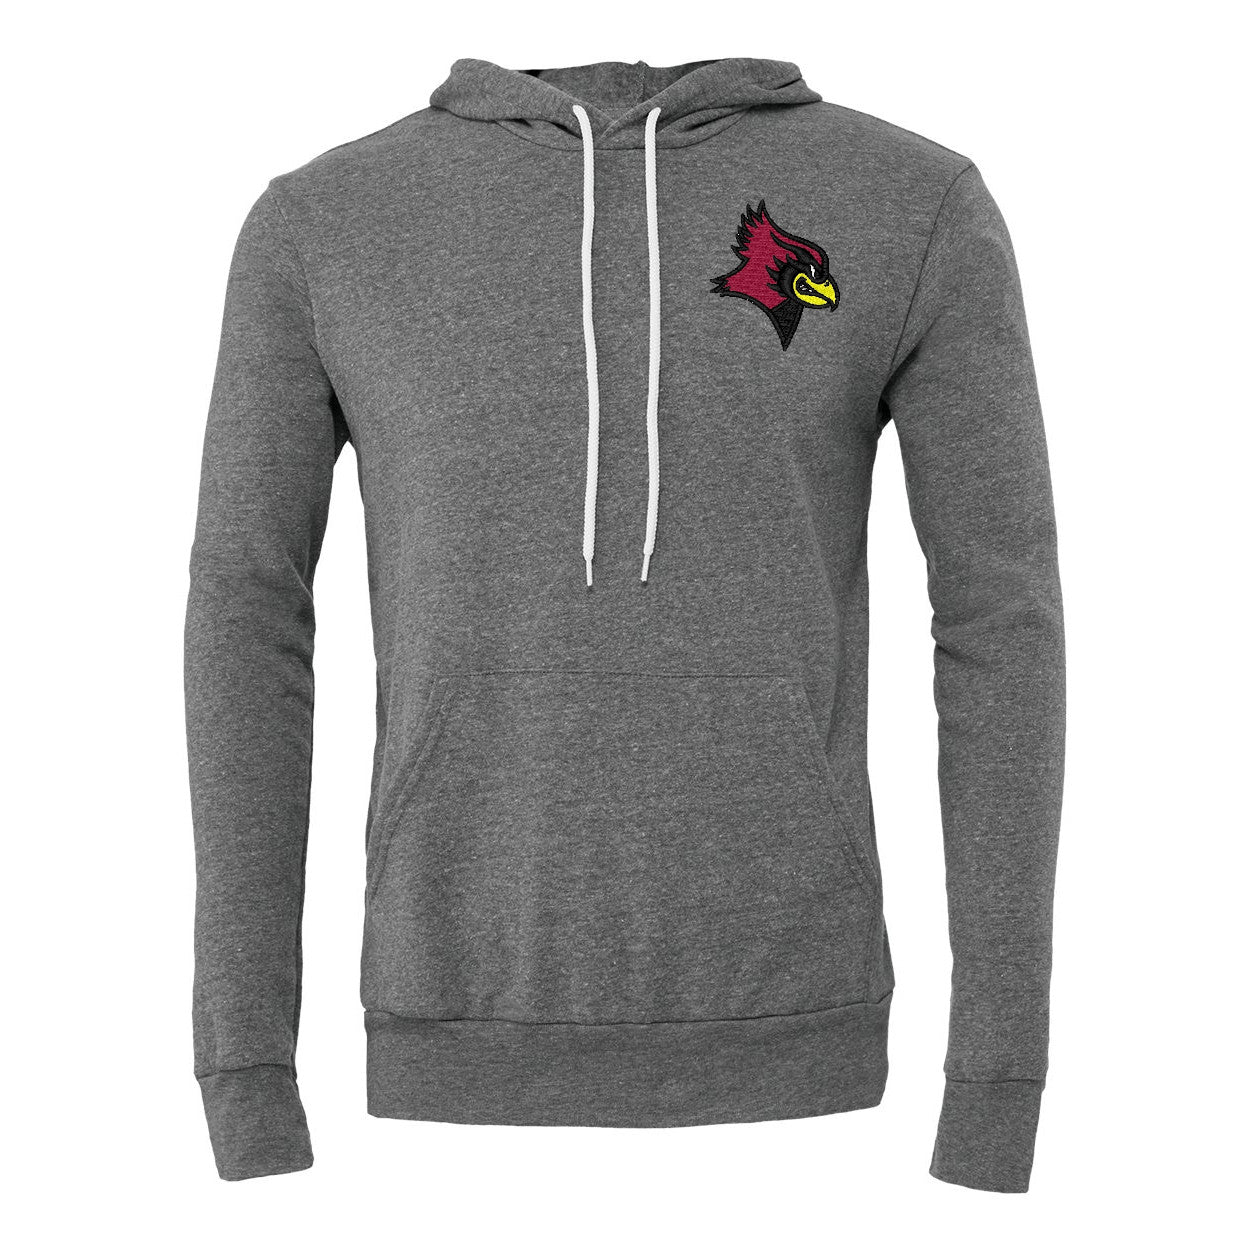 Redbird Hoodie Sweatshirt - 2 colors/styles available